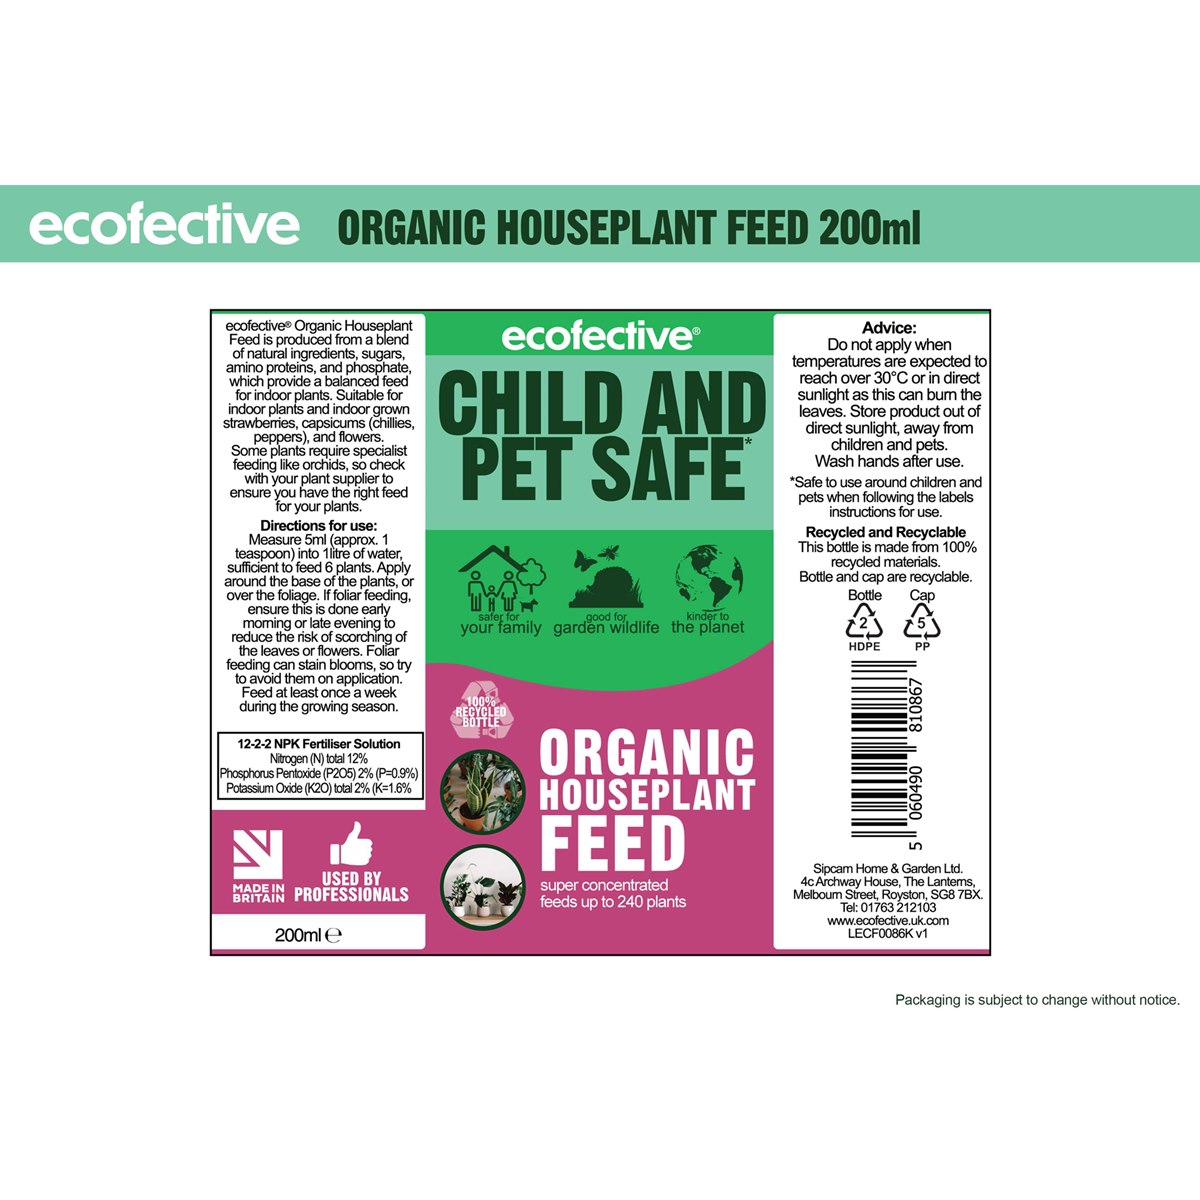 Ecofective Organic Houseplant Feed usage instructions